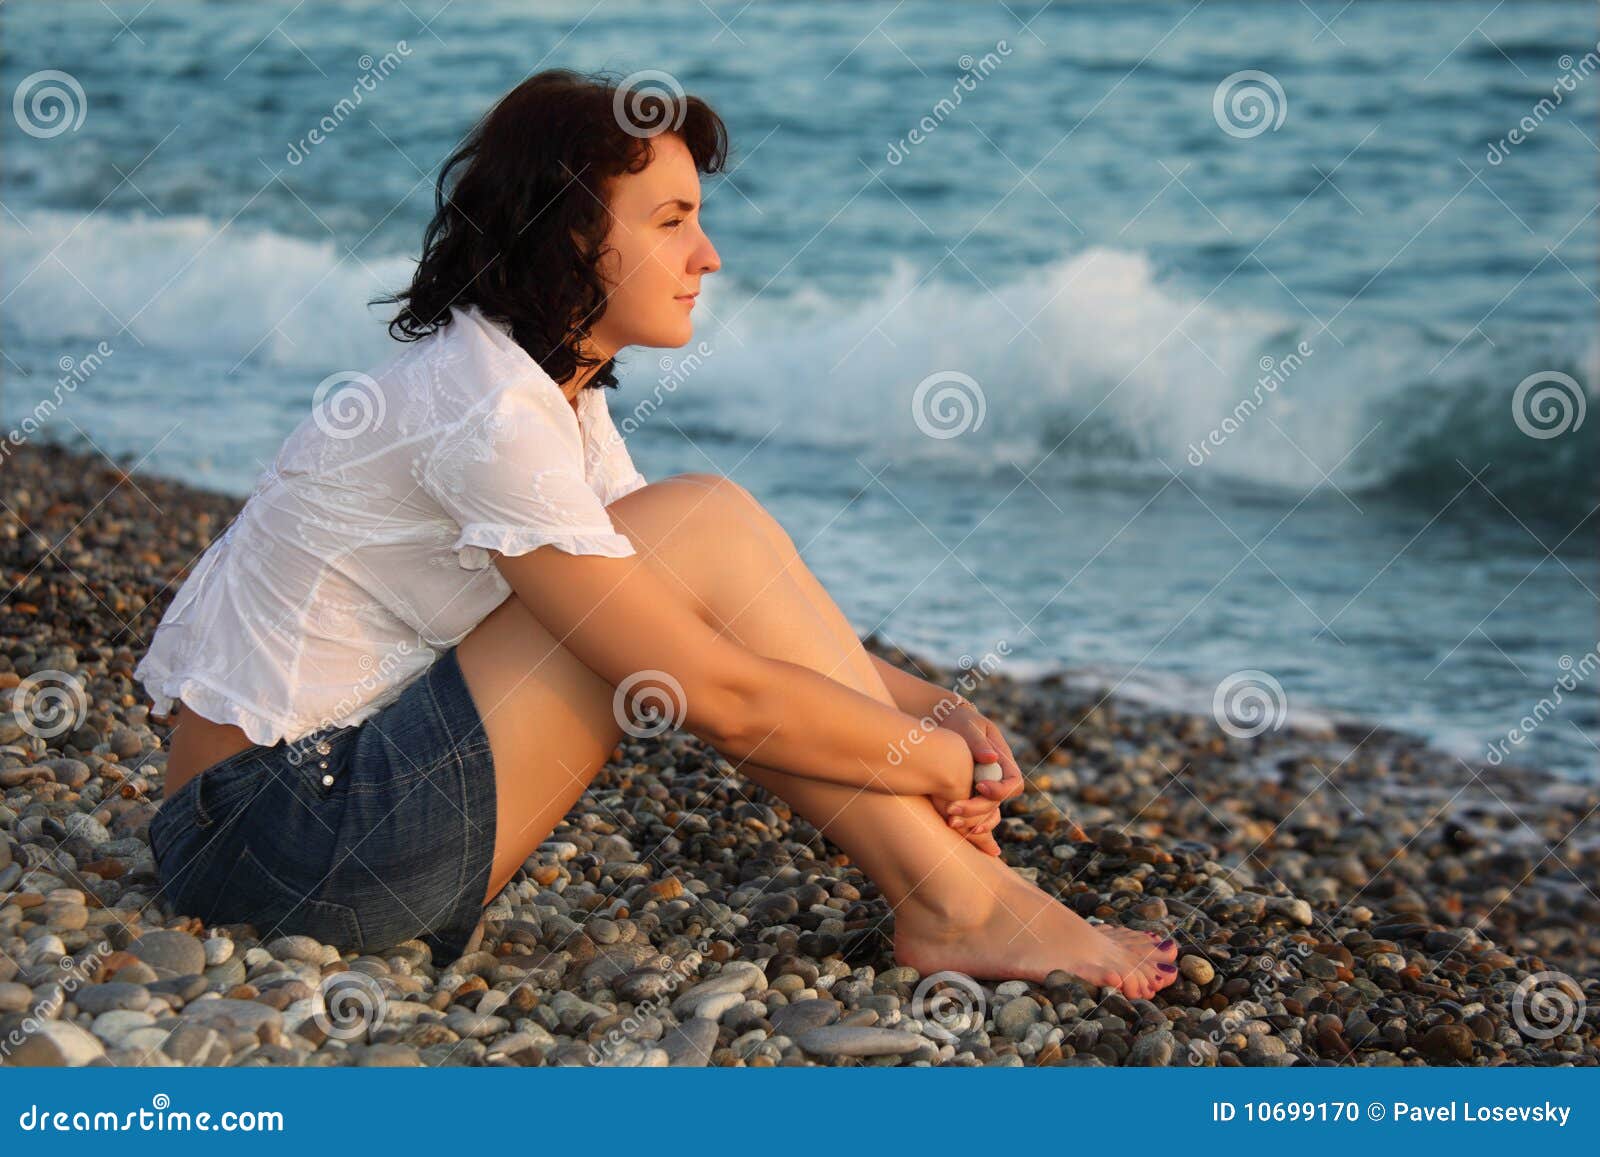 woman sits ashore of sea